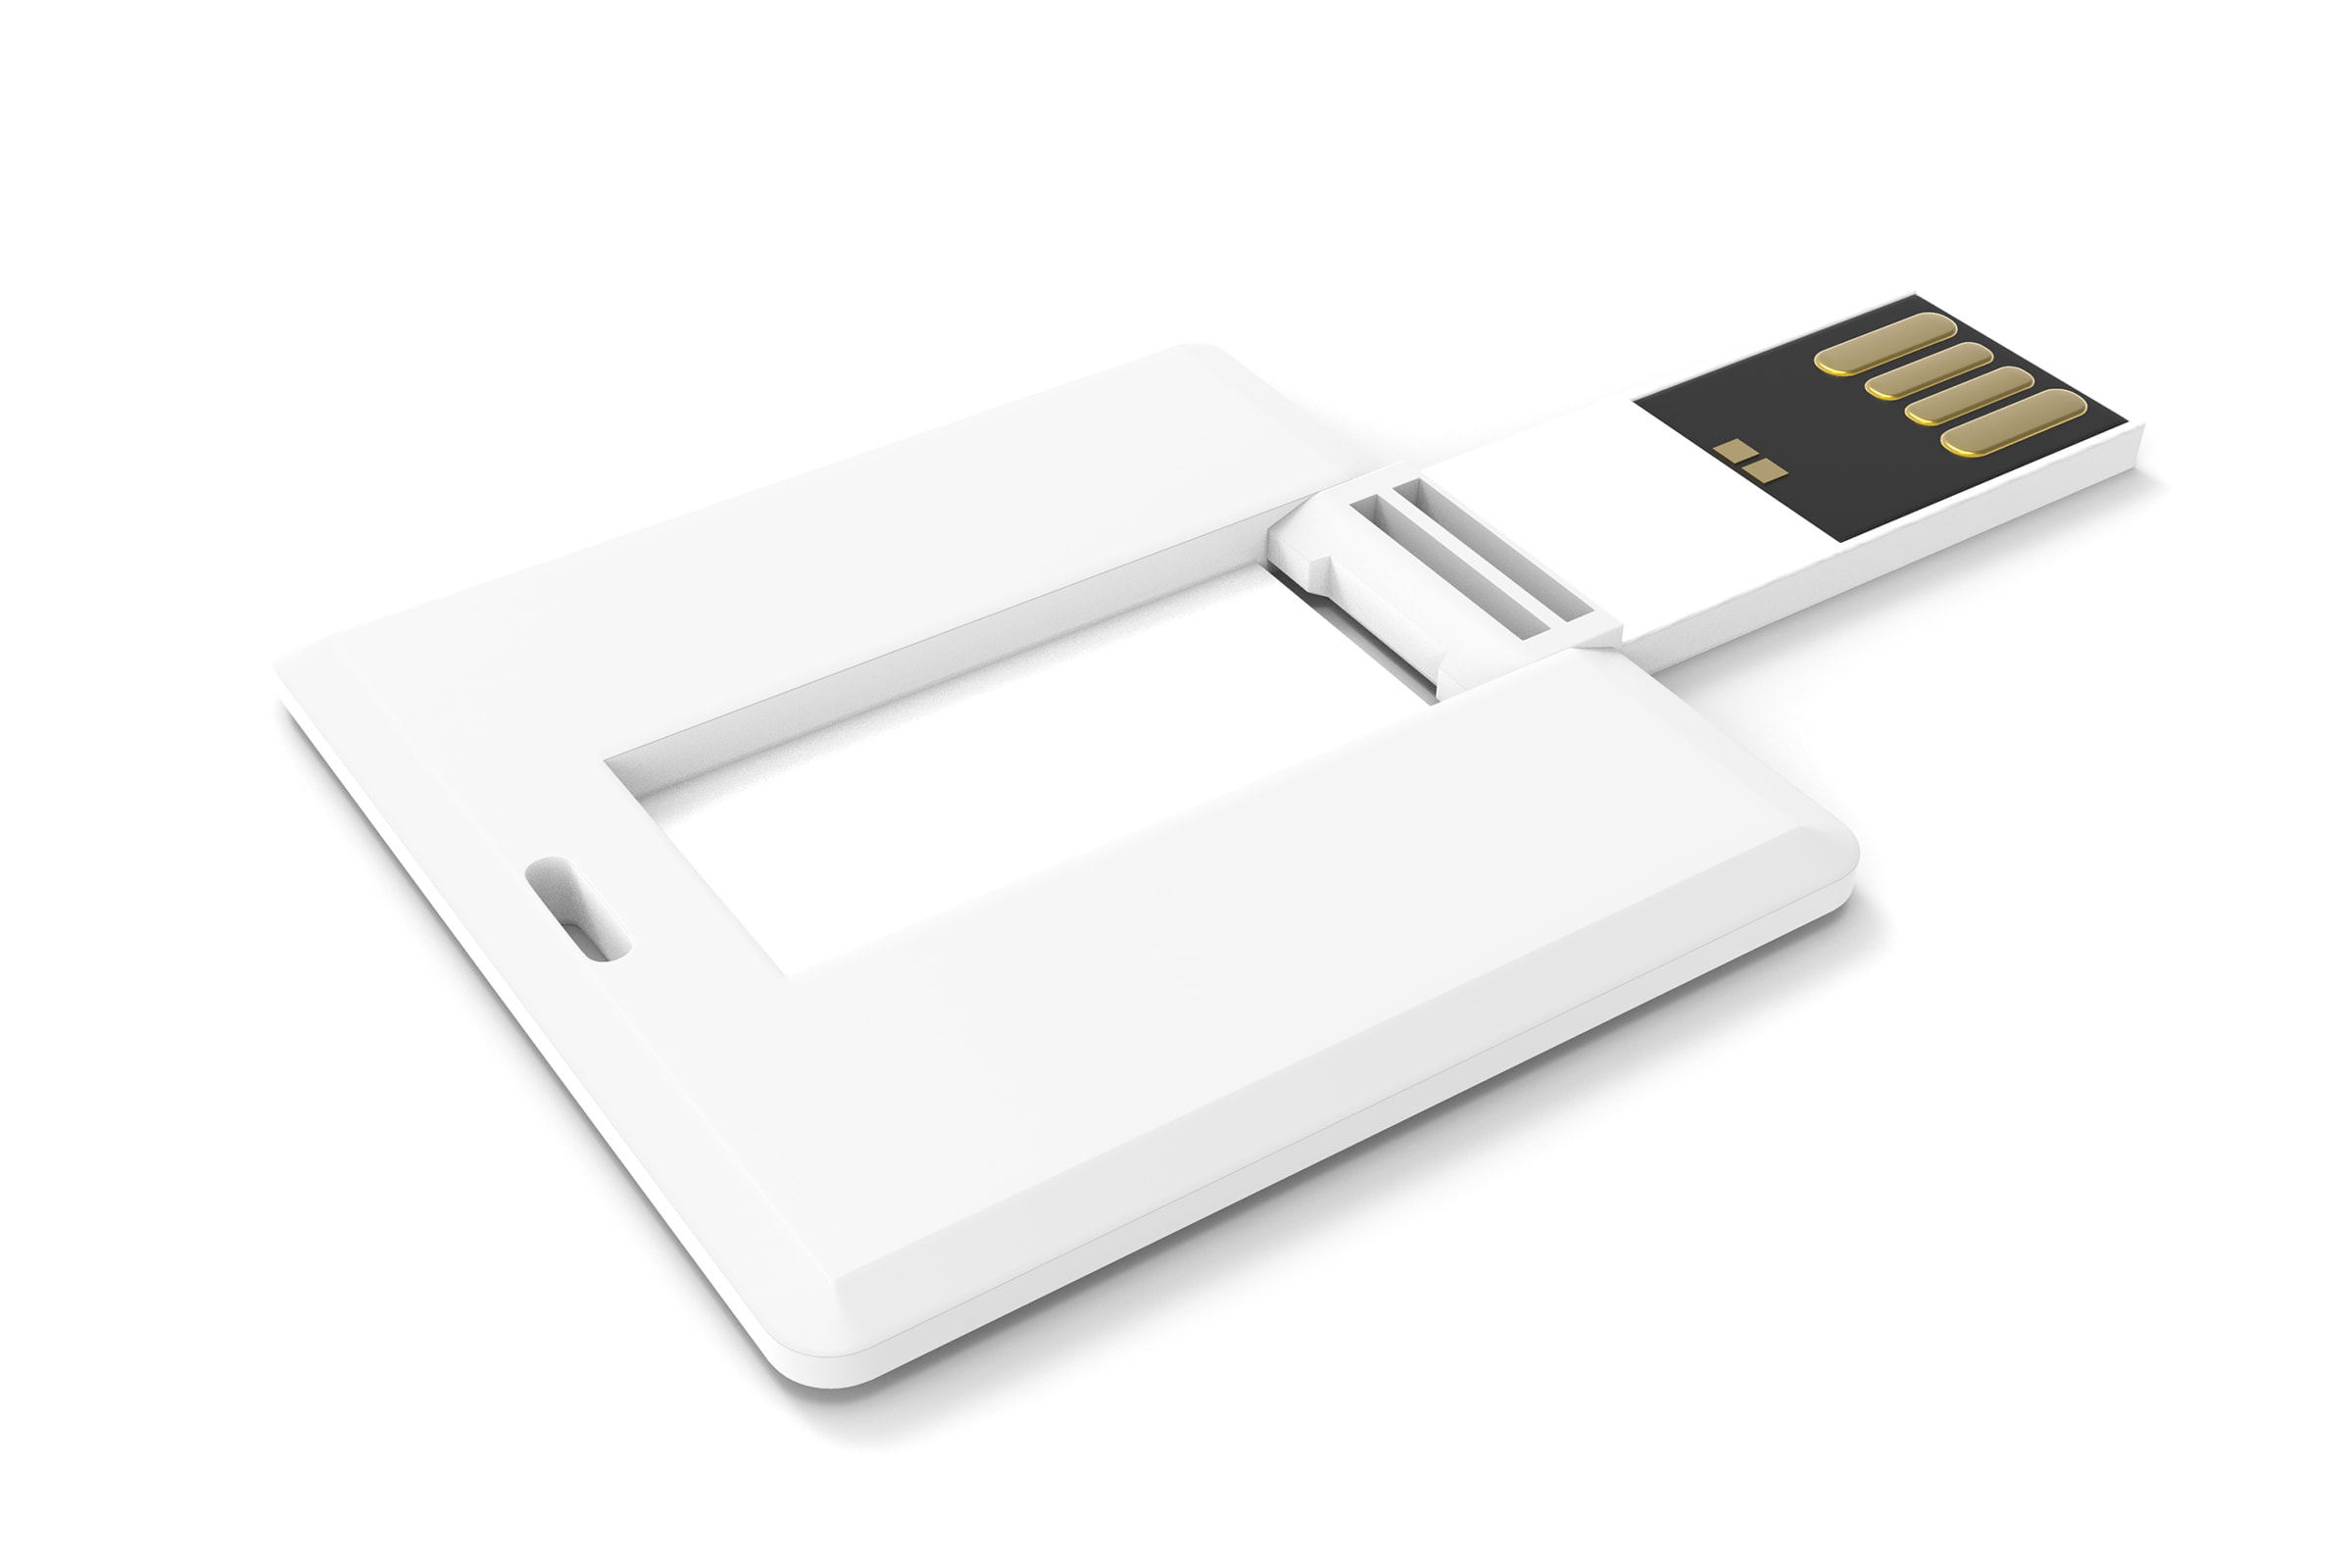 USB Square Card